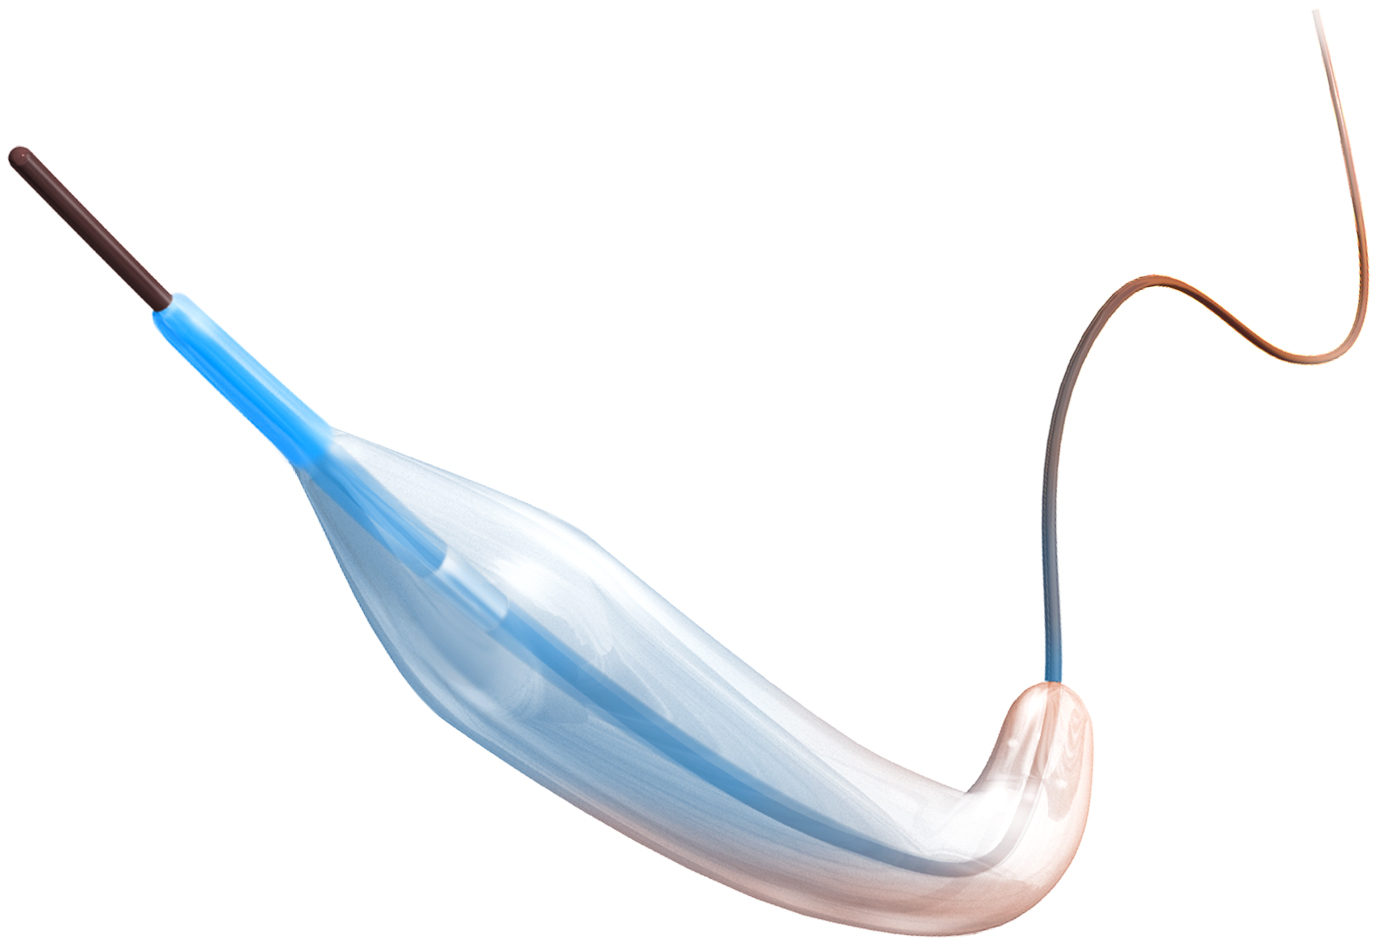 Tercross® Balloon Dilatation Catheter